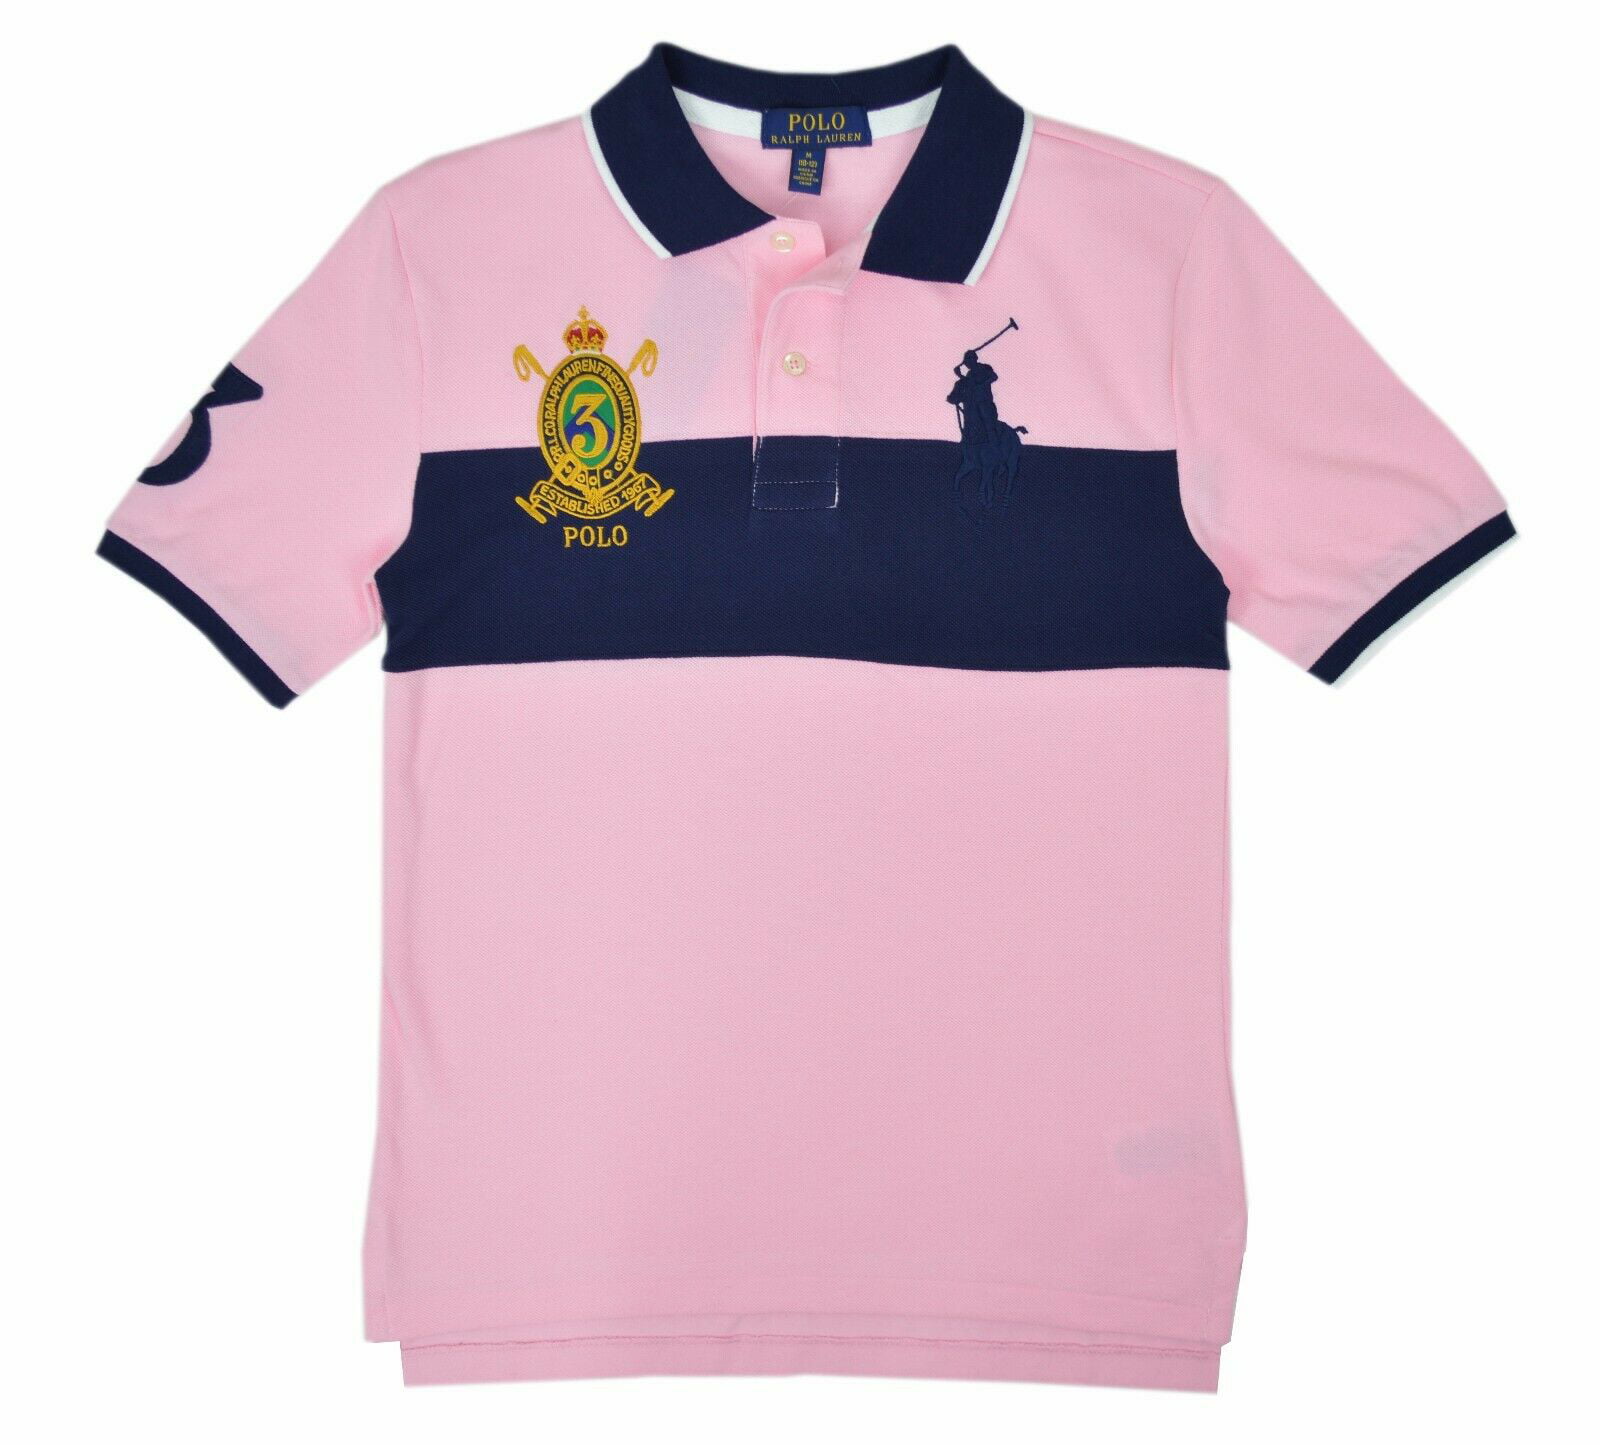 New Polo Ralph Lauren Boys Kids 100% Cotton Mesh Shirt Polo Pink Sz M ...